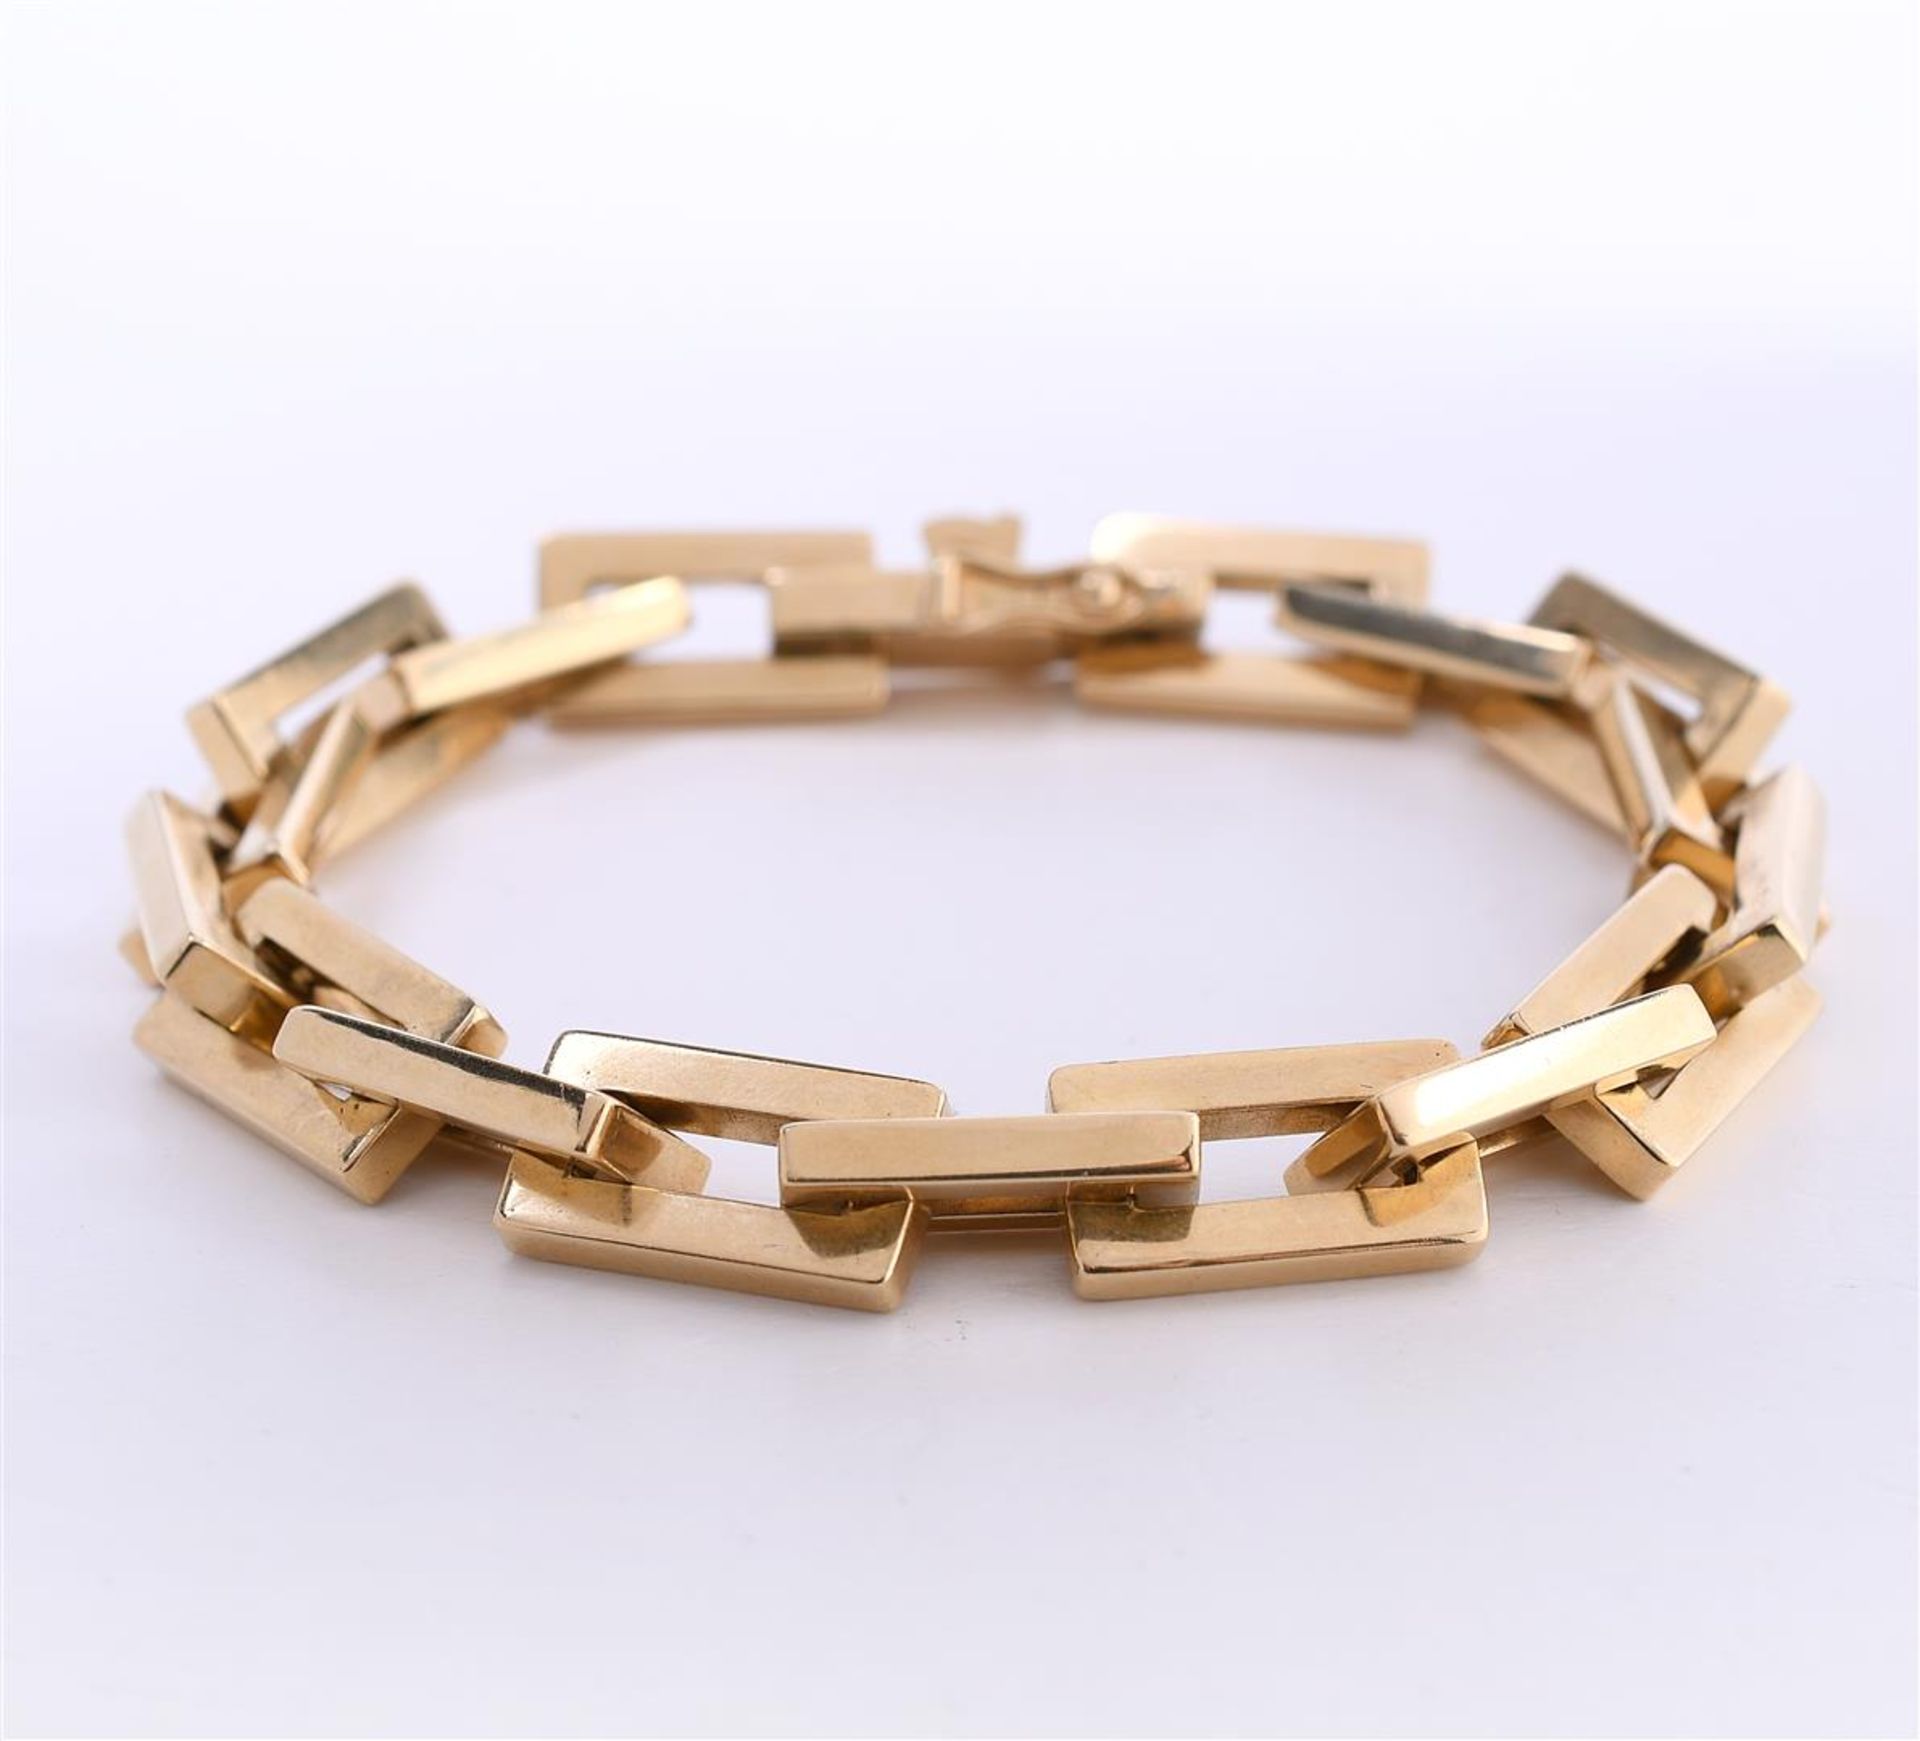 18 kt solid design bracelet with rectangular links. Total weight 30 grams - Image 2 of 5